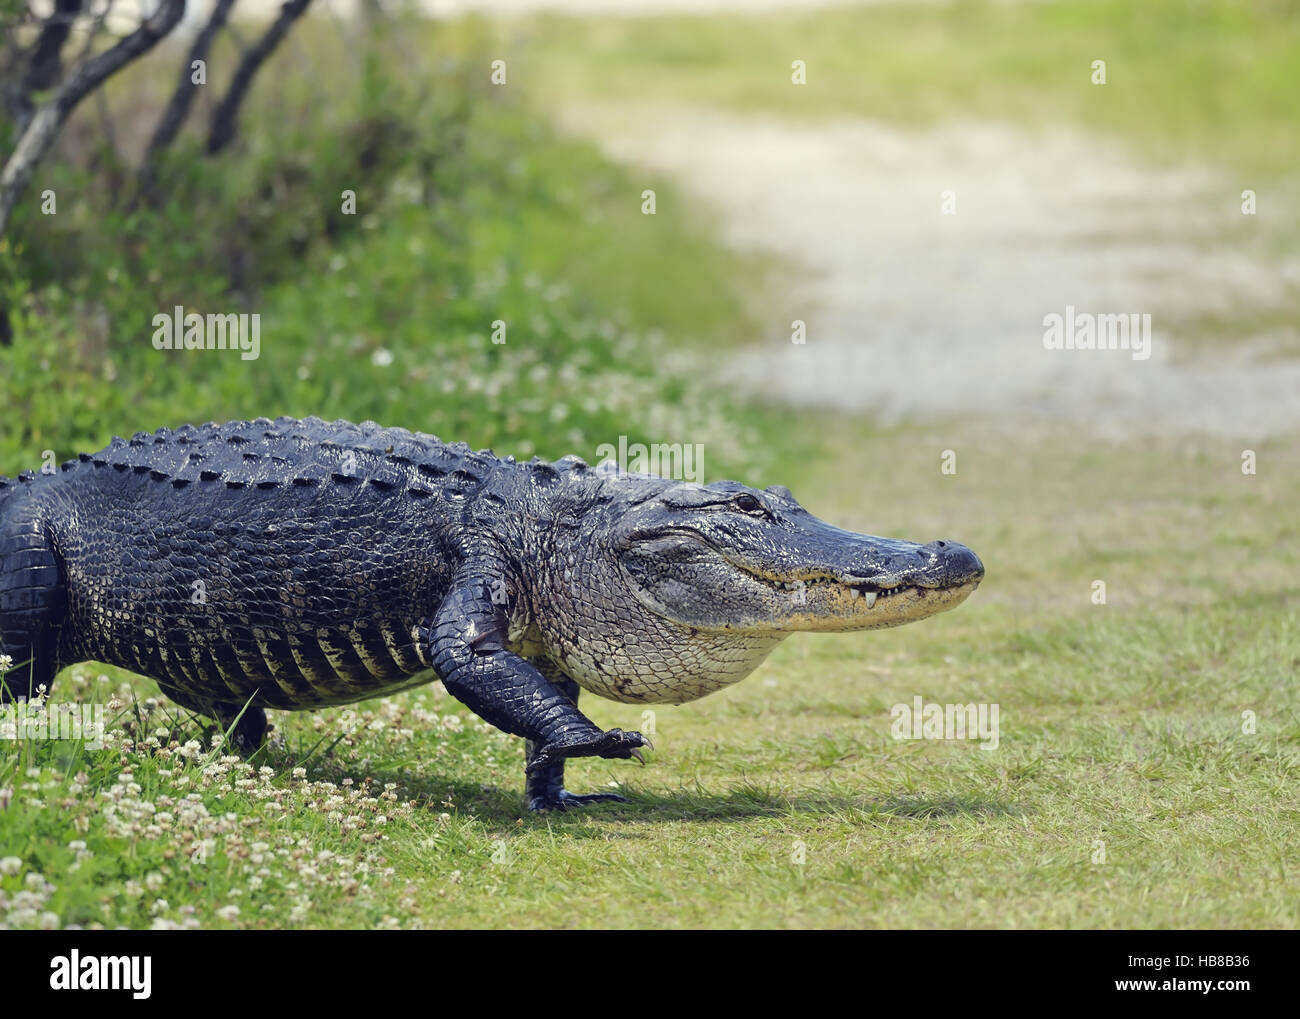 Alligator Crossing a Trail Stock Photo